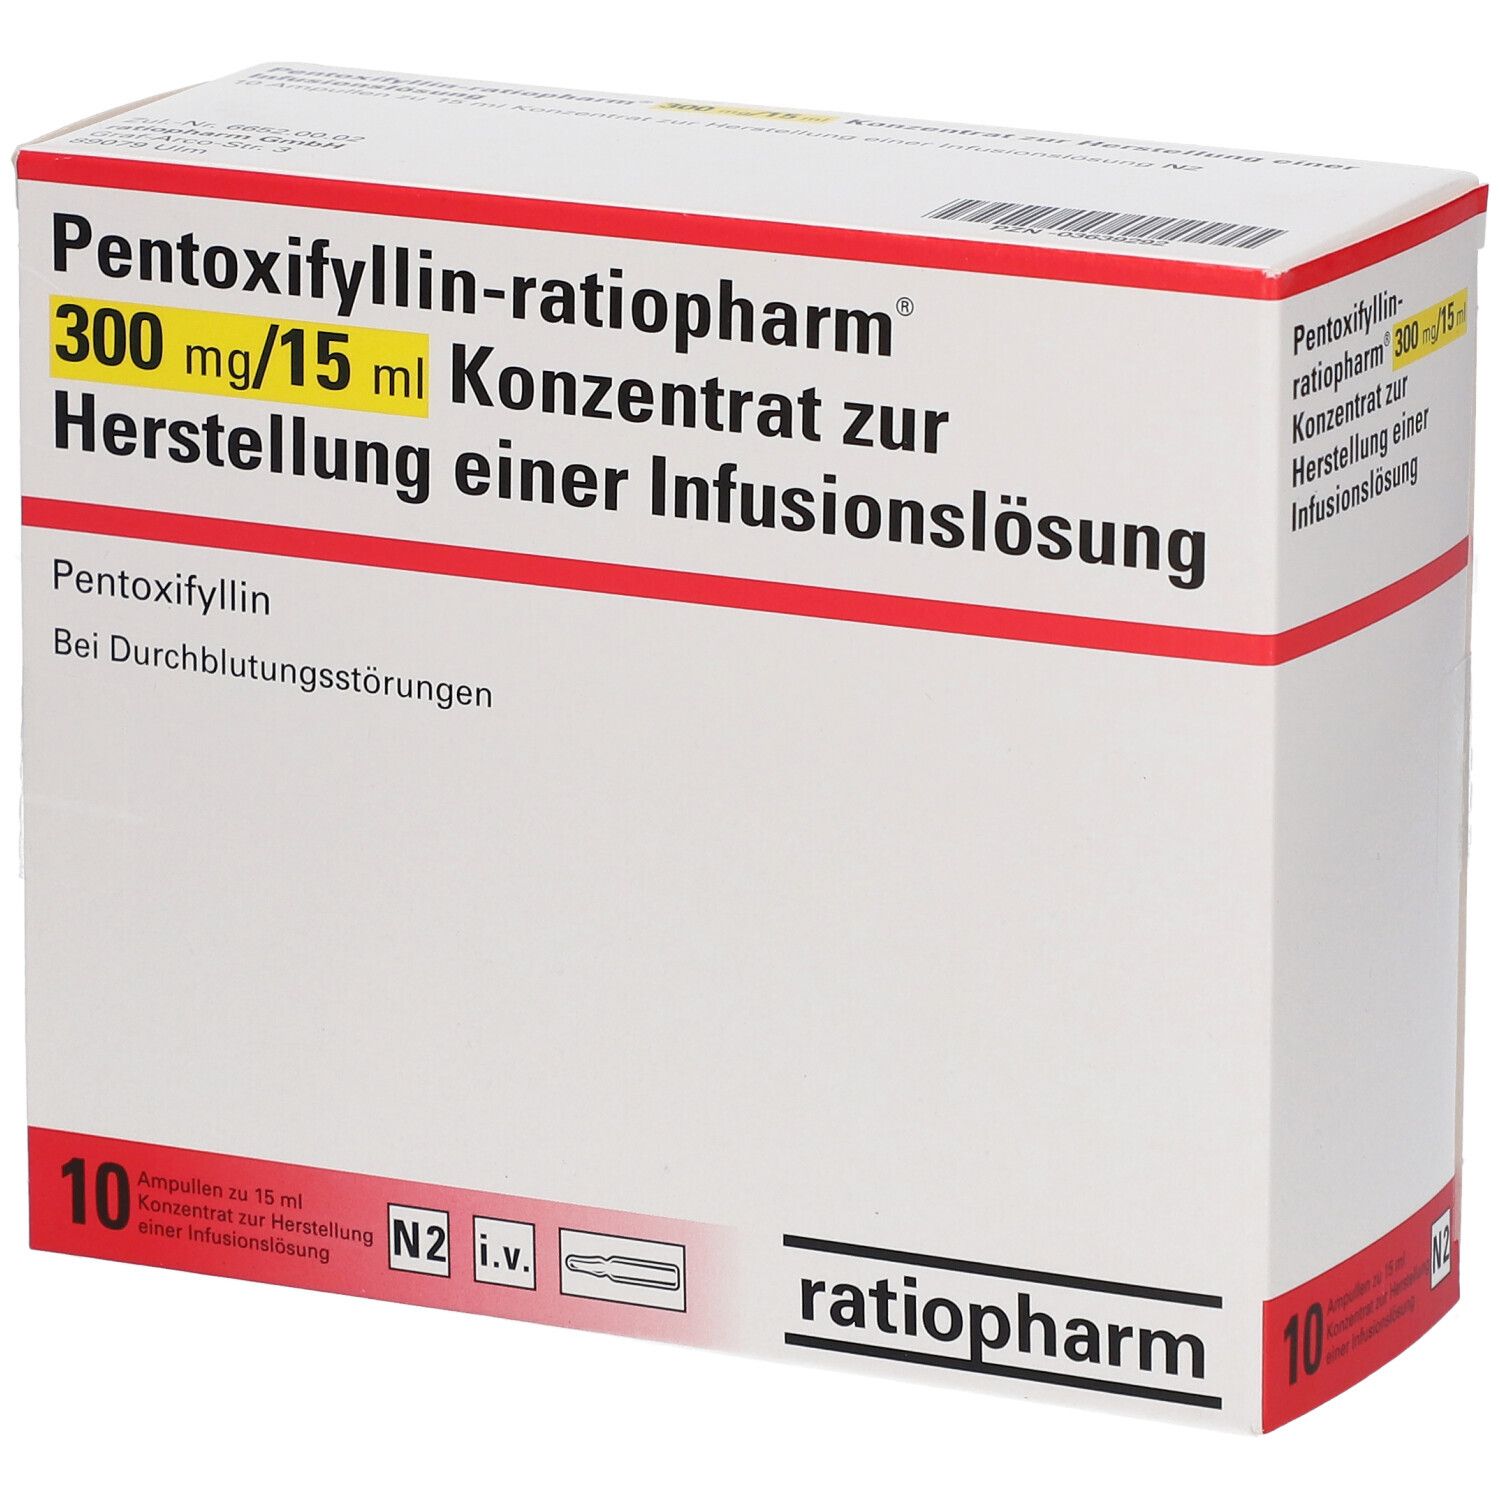 toxifyllin-ratiopharm® 300 mg/15 ml